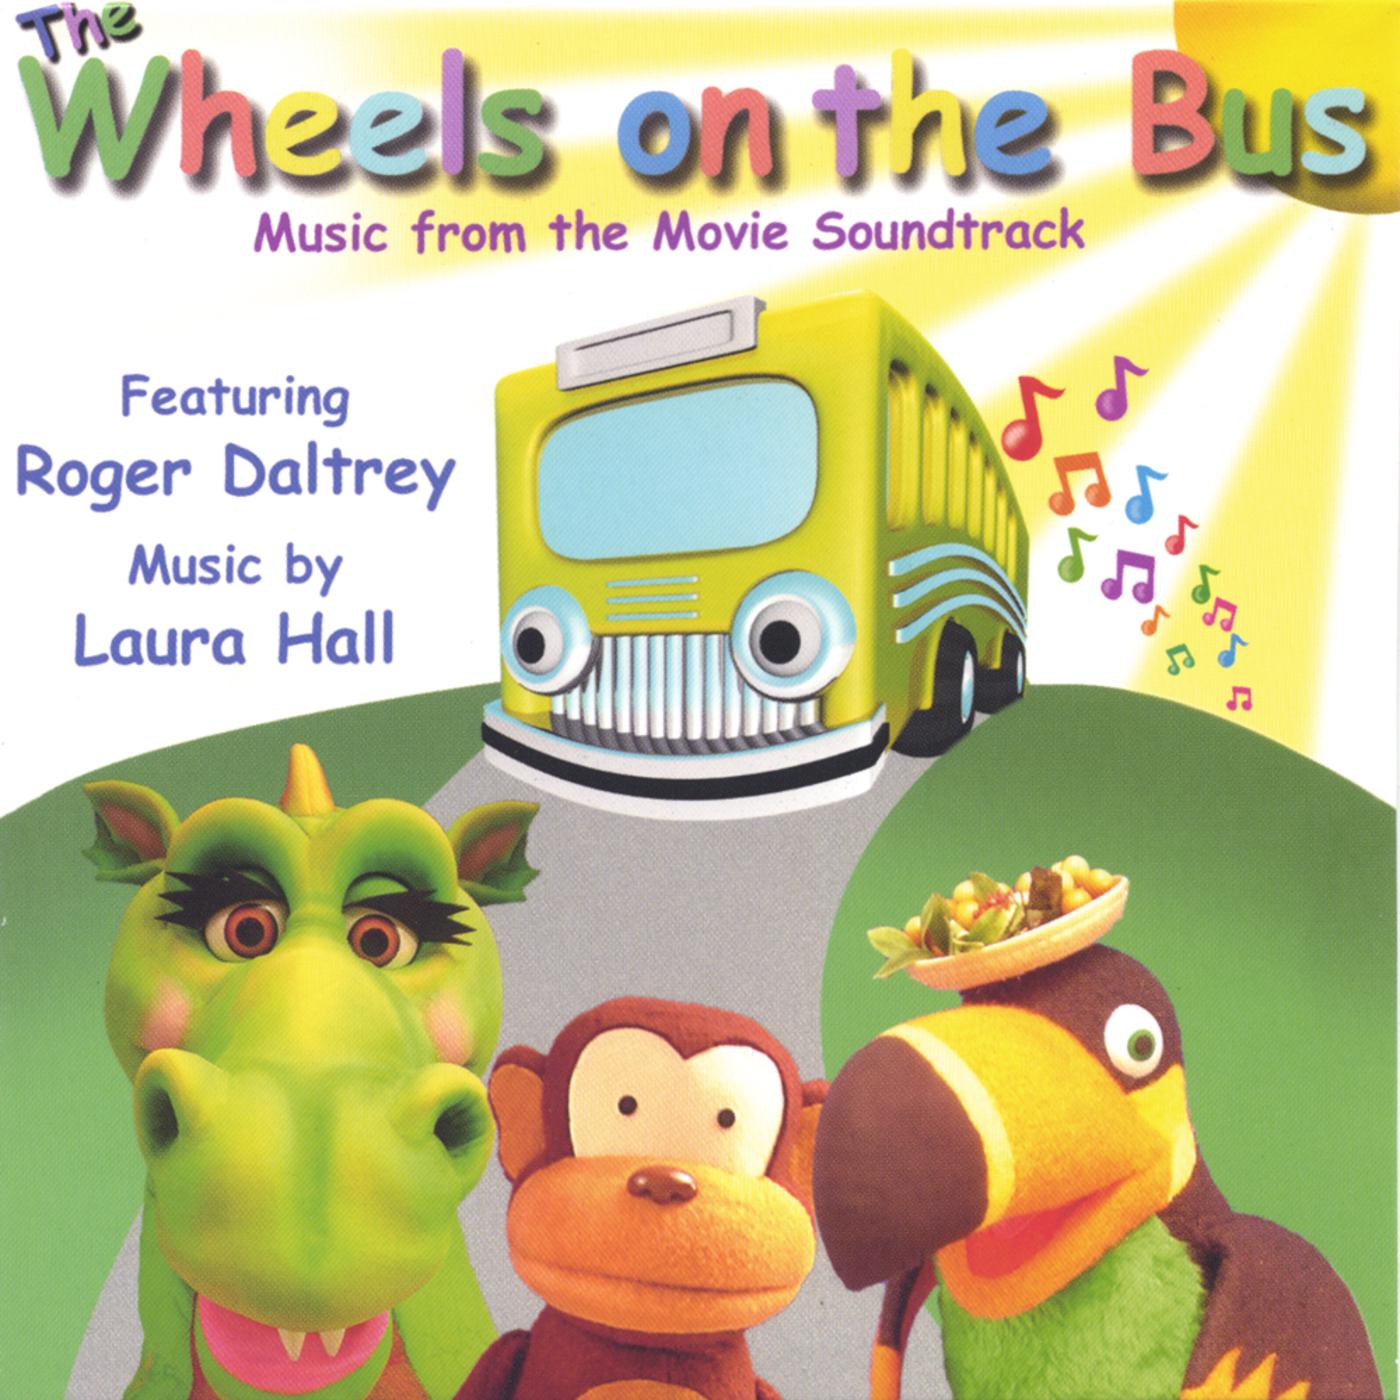 Roger Daltrey - Bubbles on the Bus